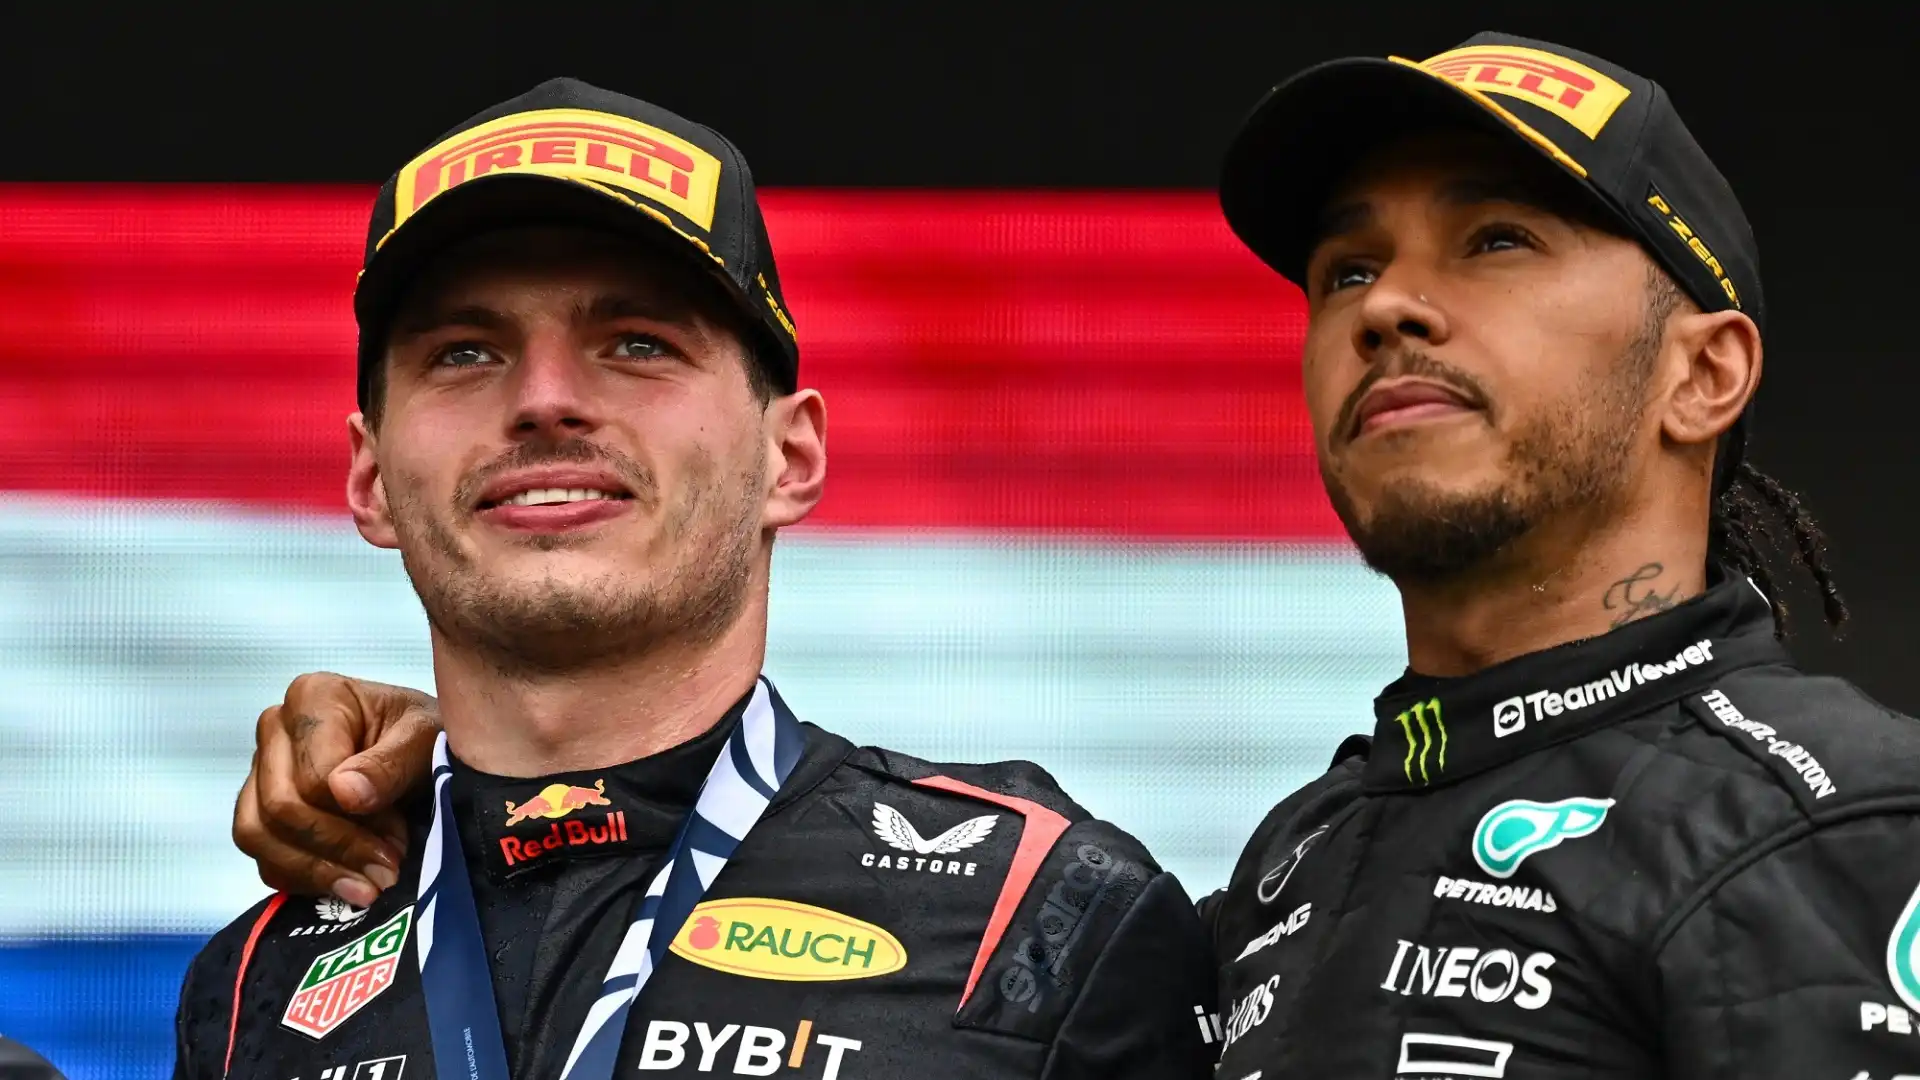 Lewis Hamilton ha battuto a sorpresa Max Verstappen in una speciale classifica